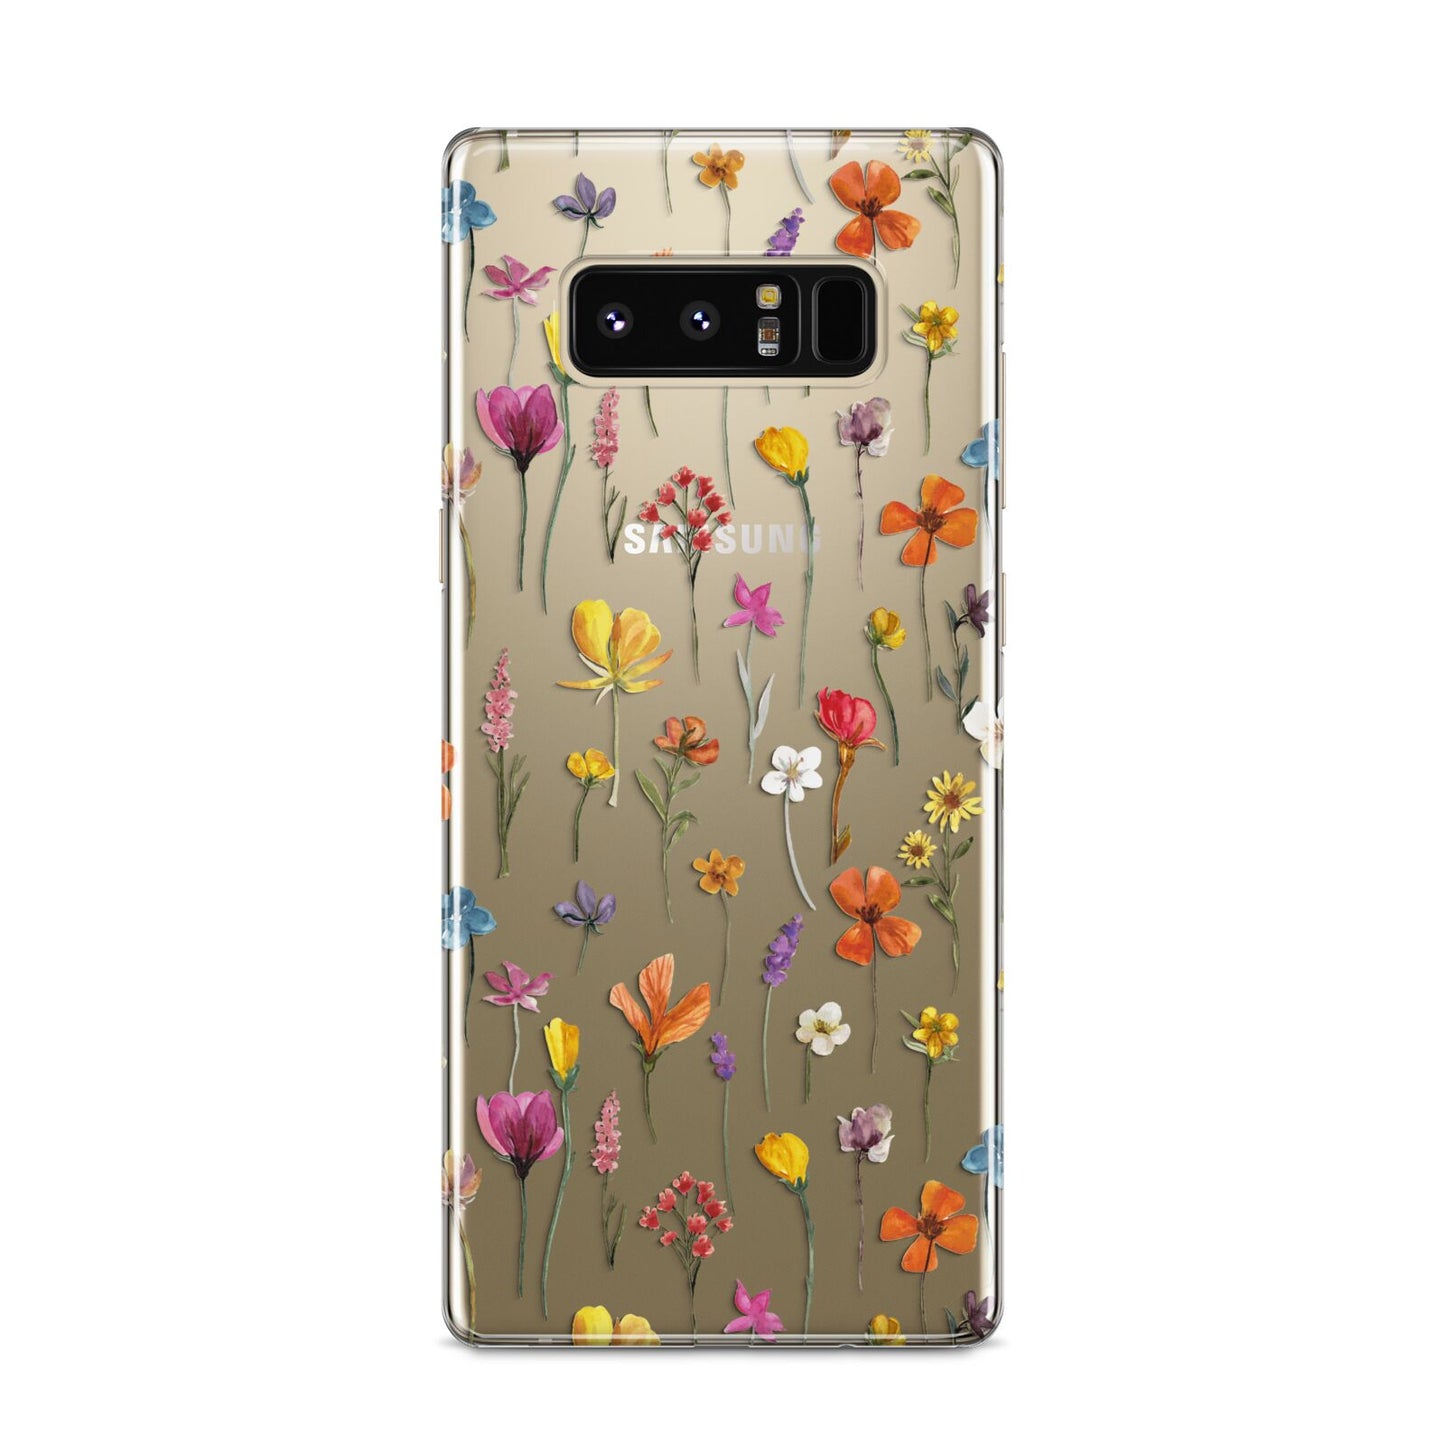 Botanical Floral Samsung Galaxy S8 Case